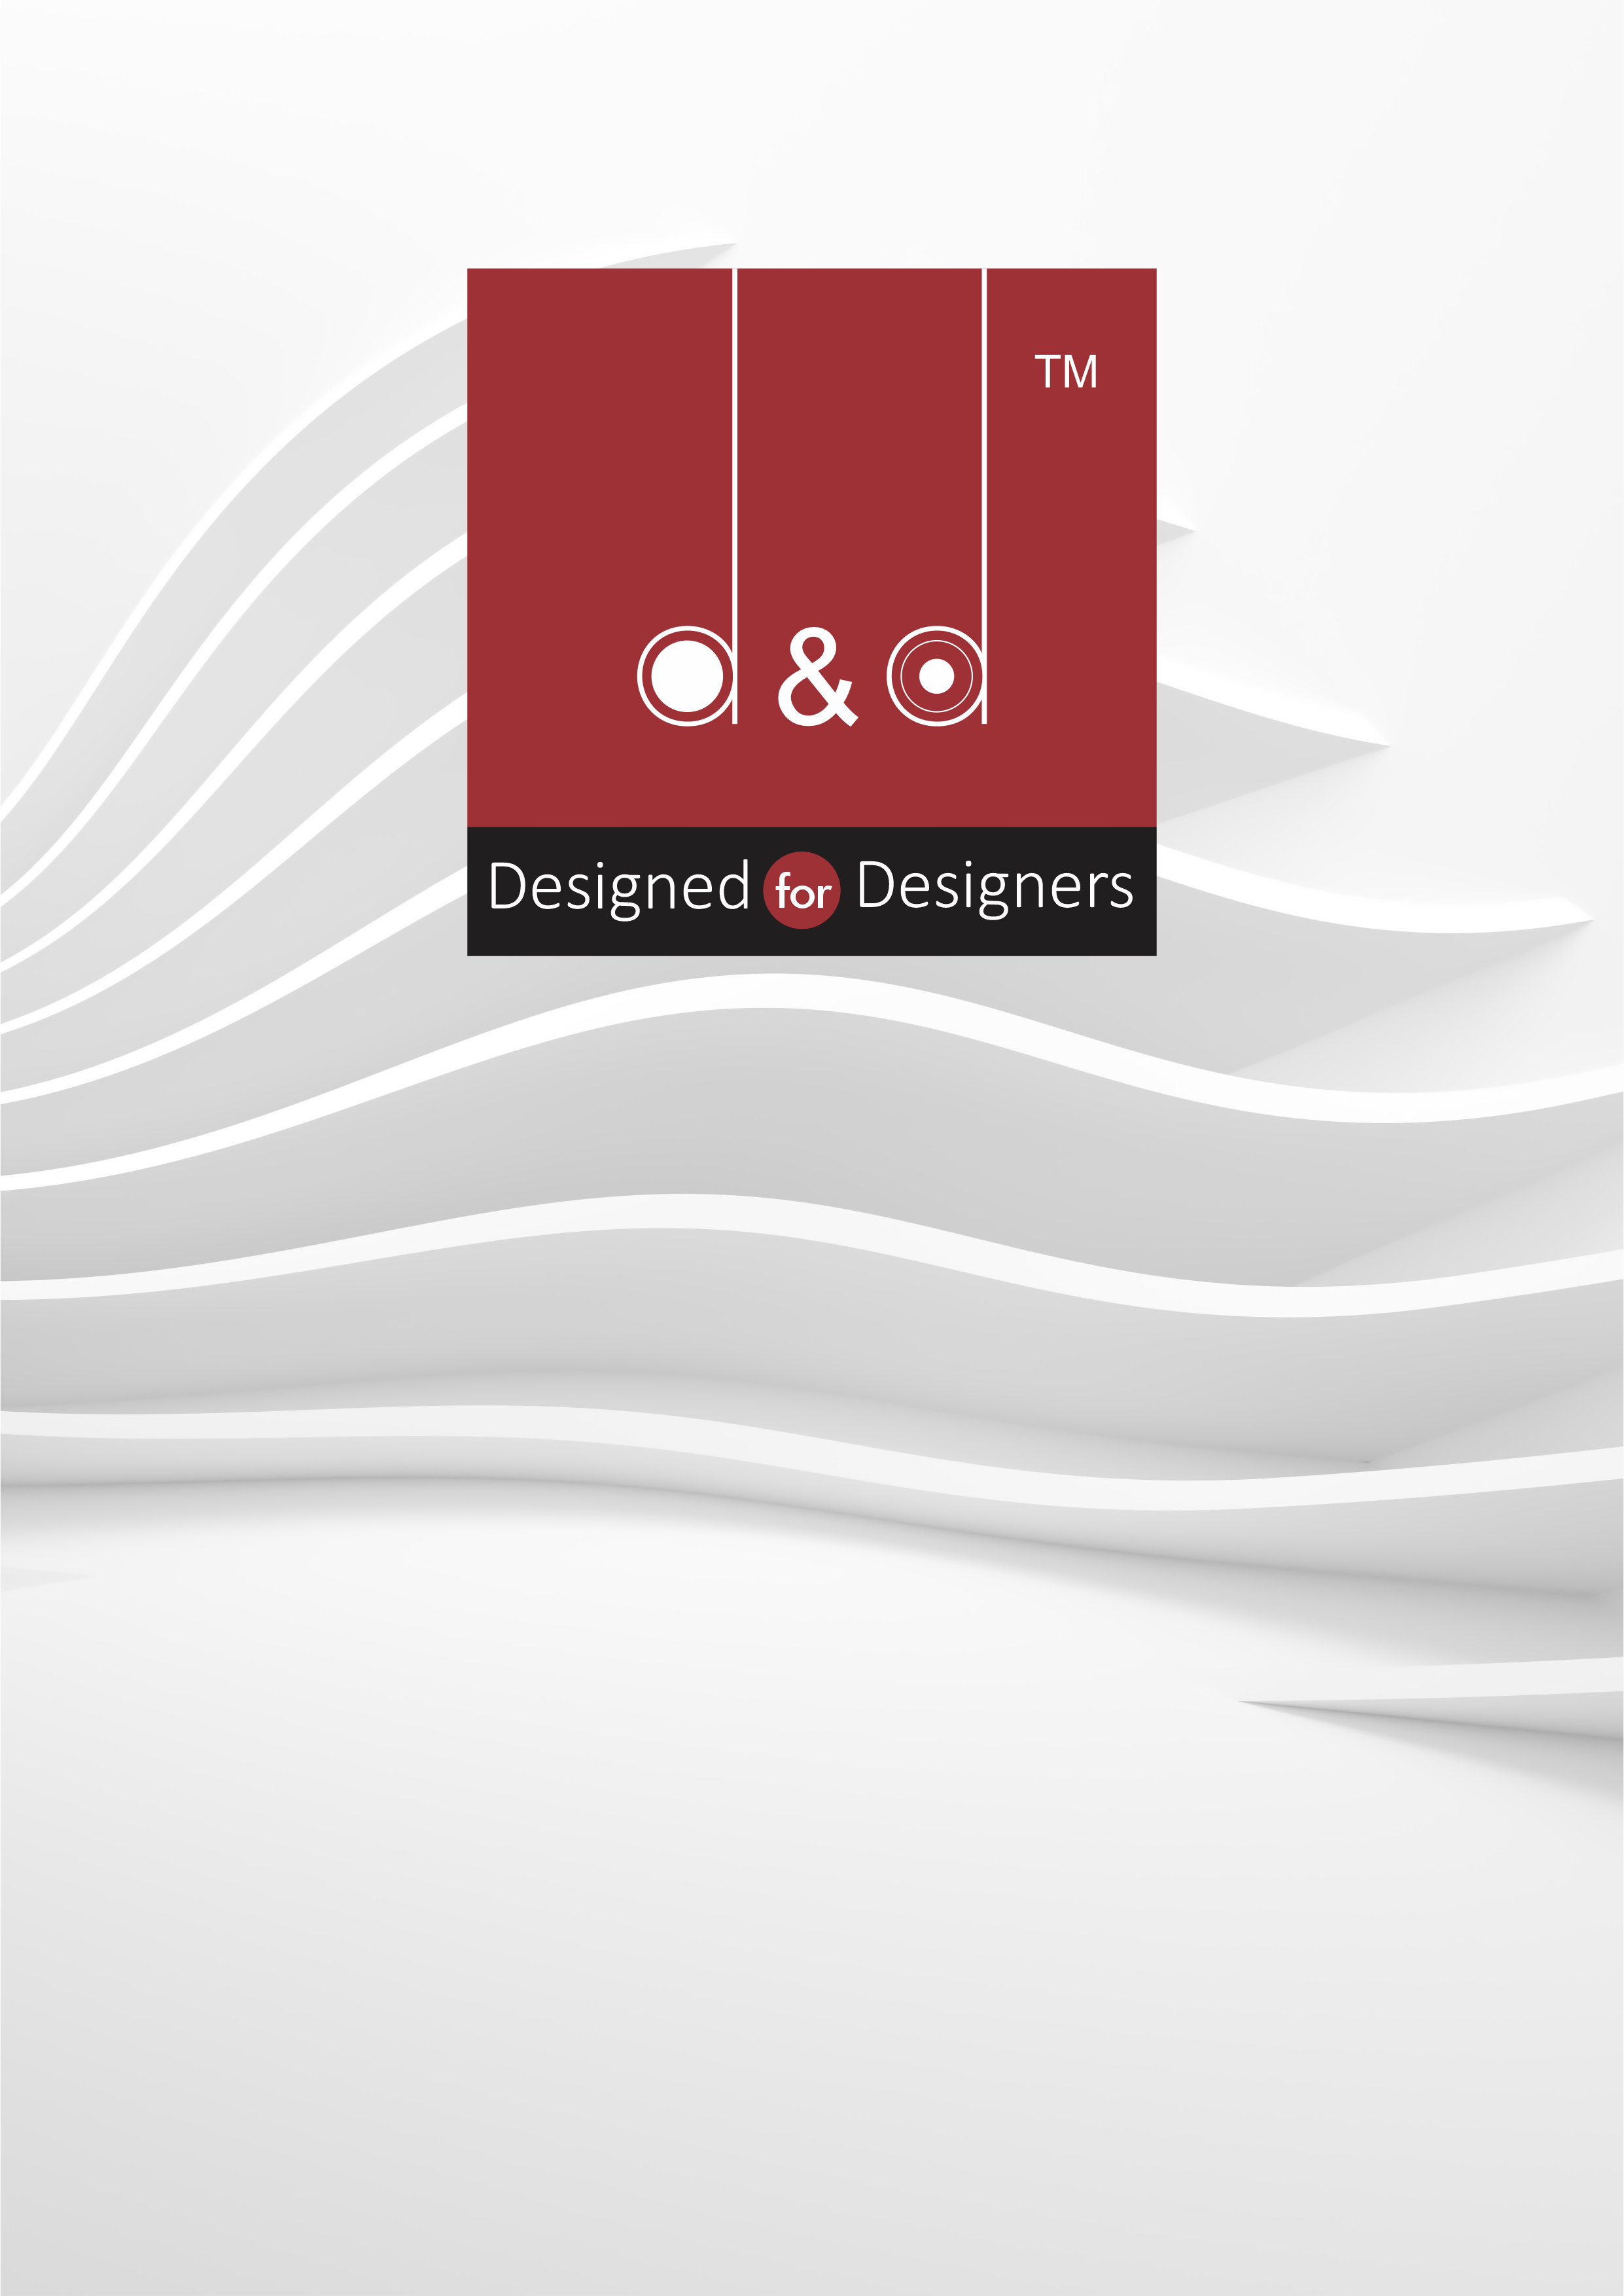 Designed for Designers